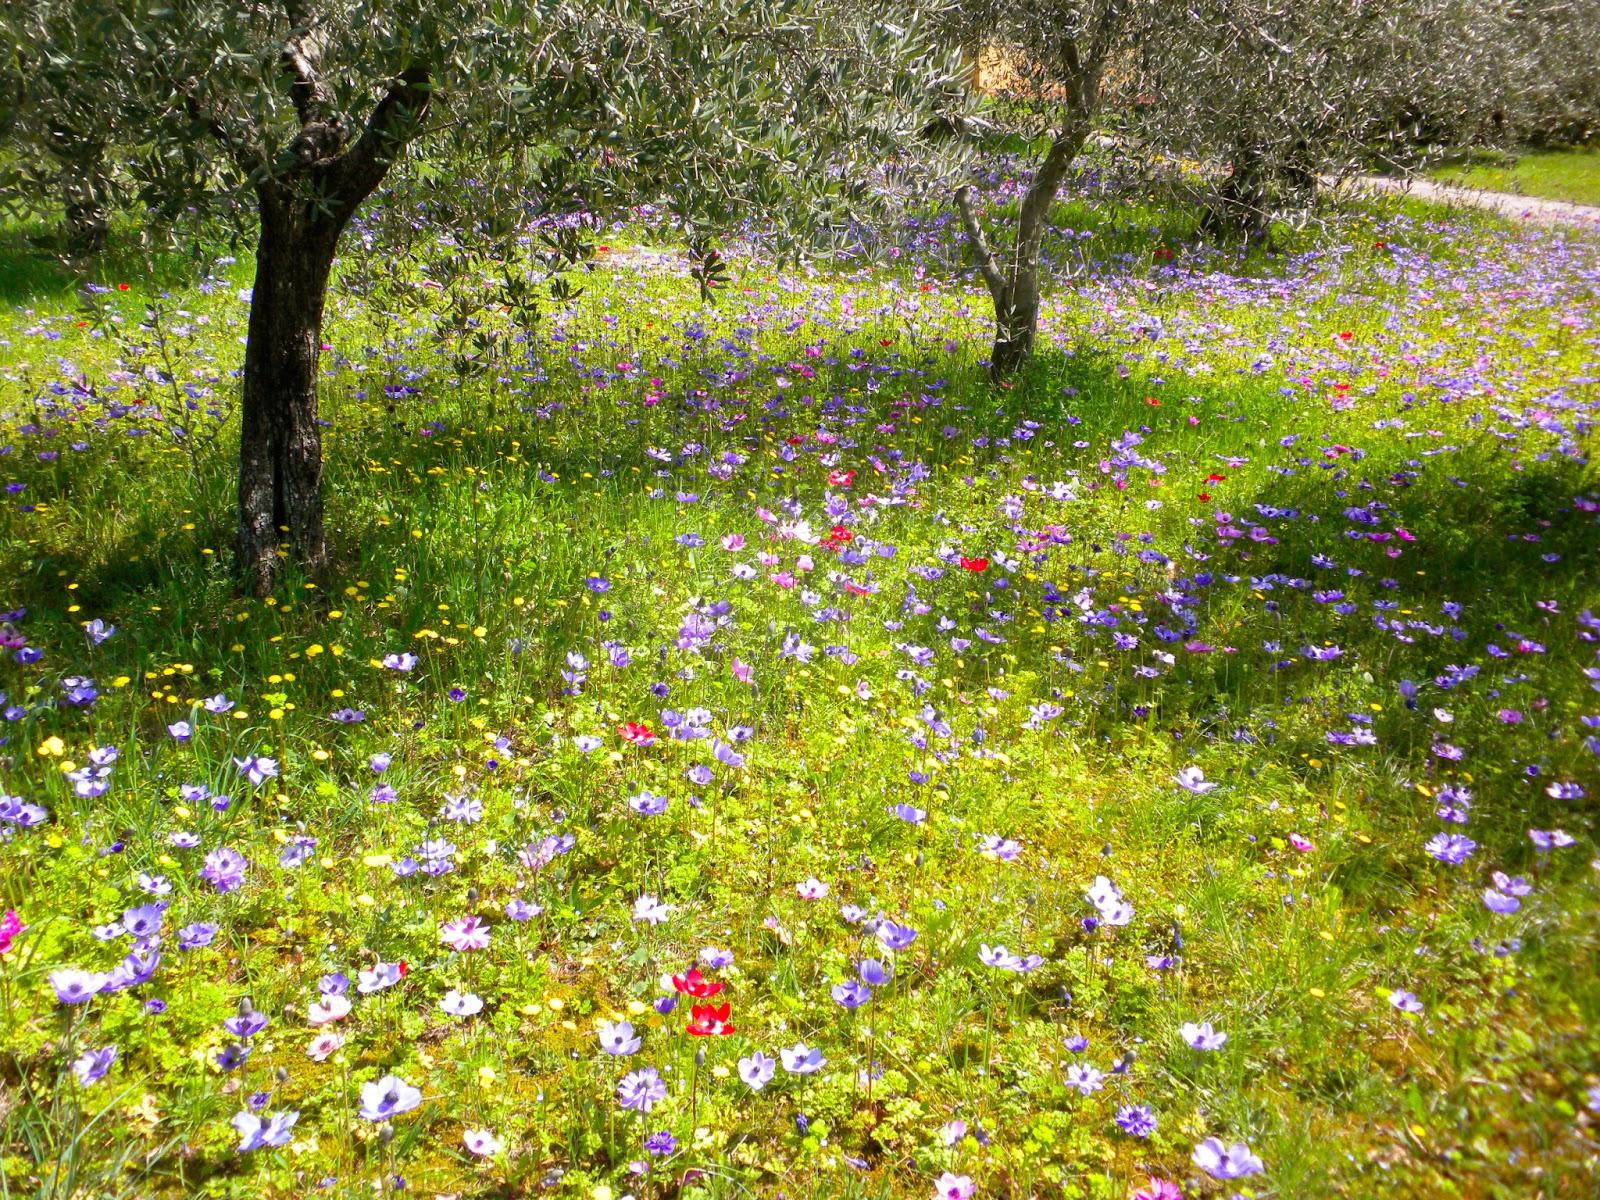 From a Tuscan Hillside: Anemone garden